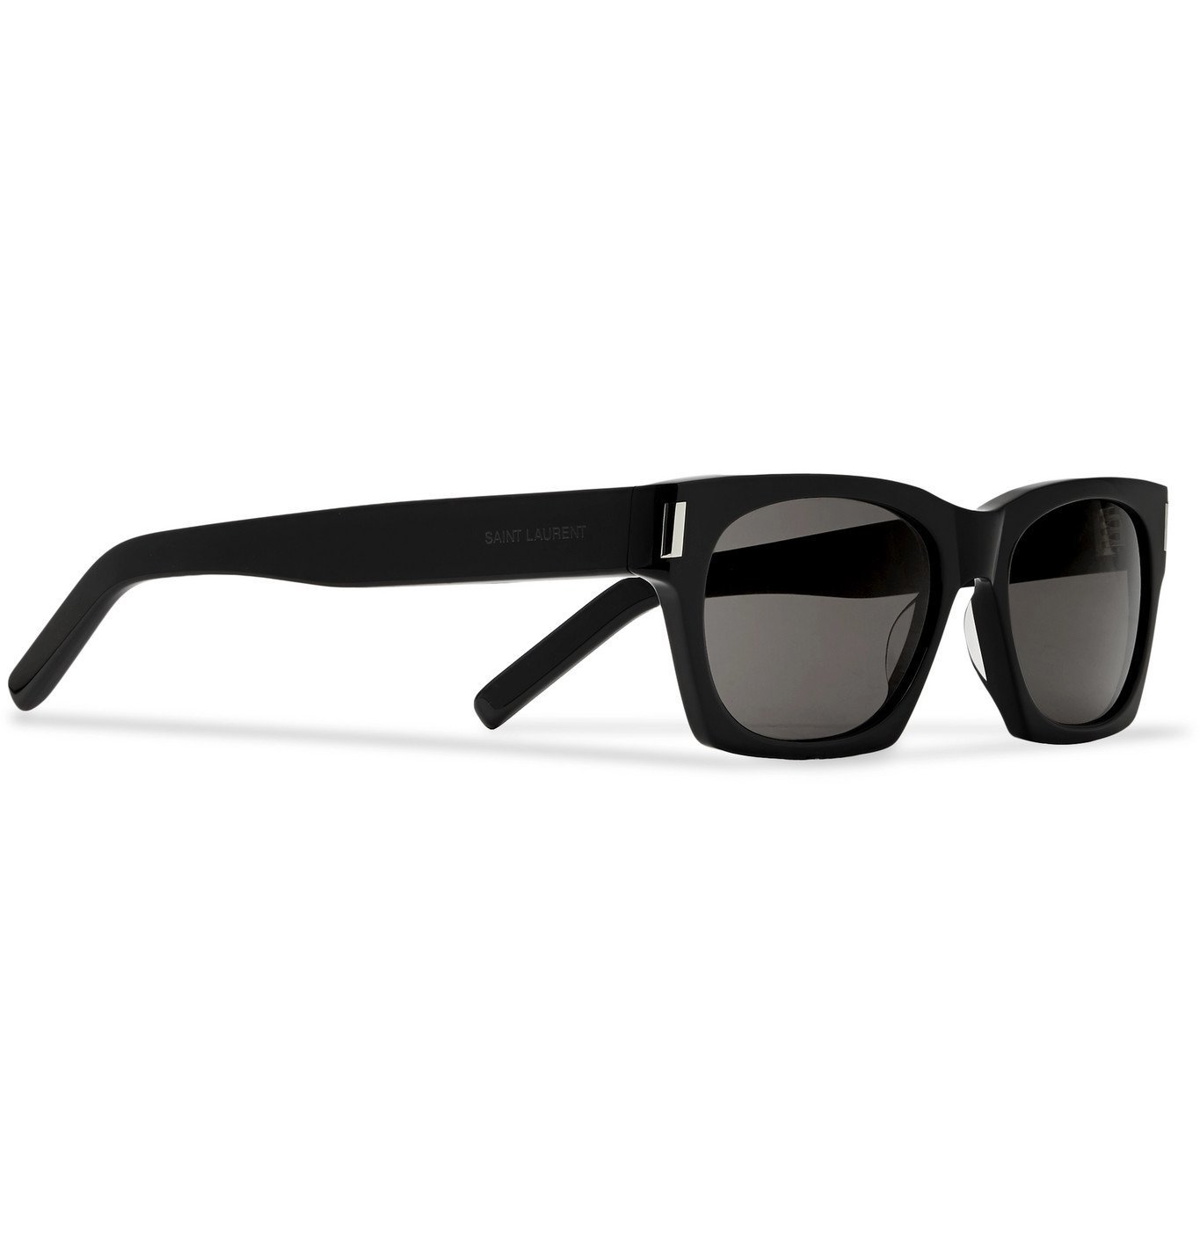 SAINT LAURENT EYEWEAR Square-frame acetate sunglasses